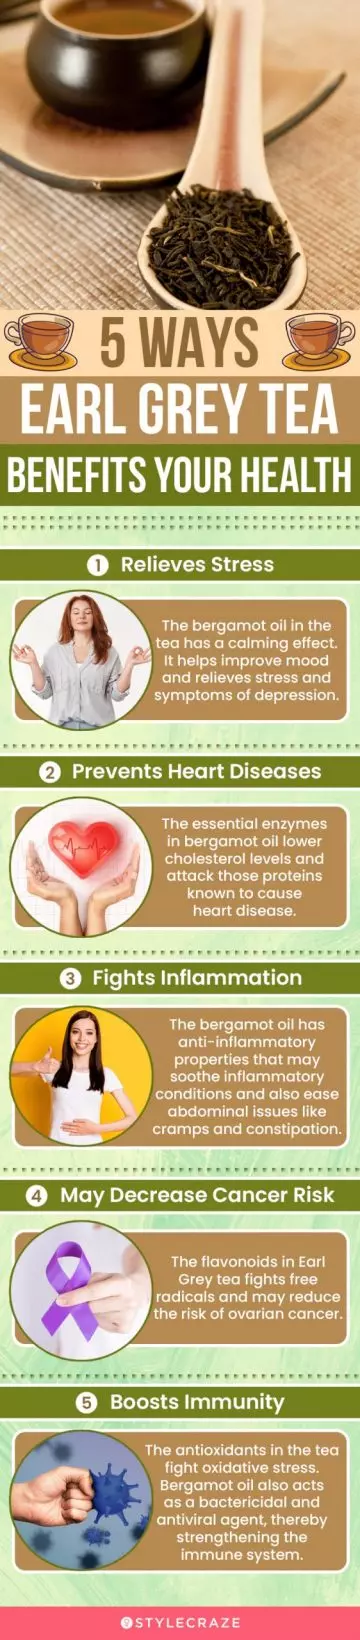 5 ways earl grey tea benefits your health (infographic)